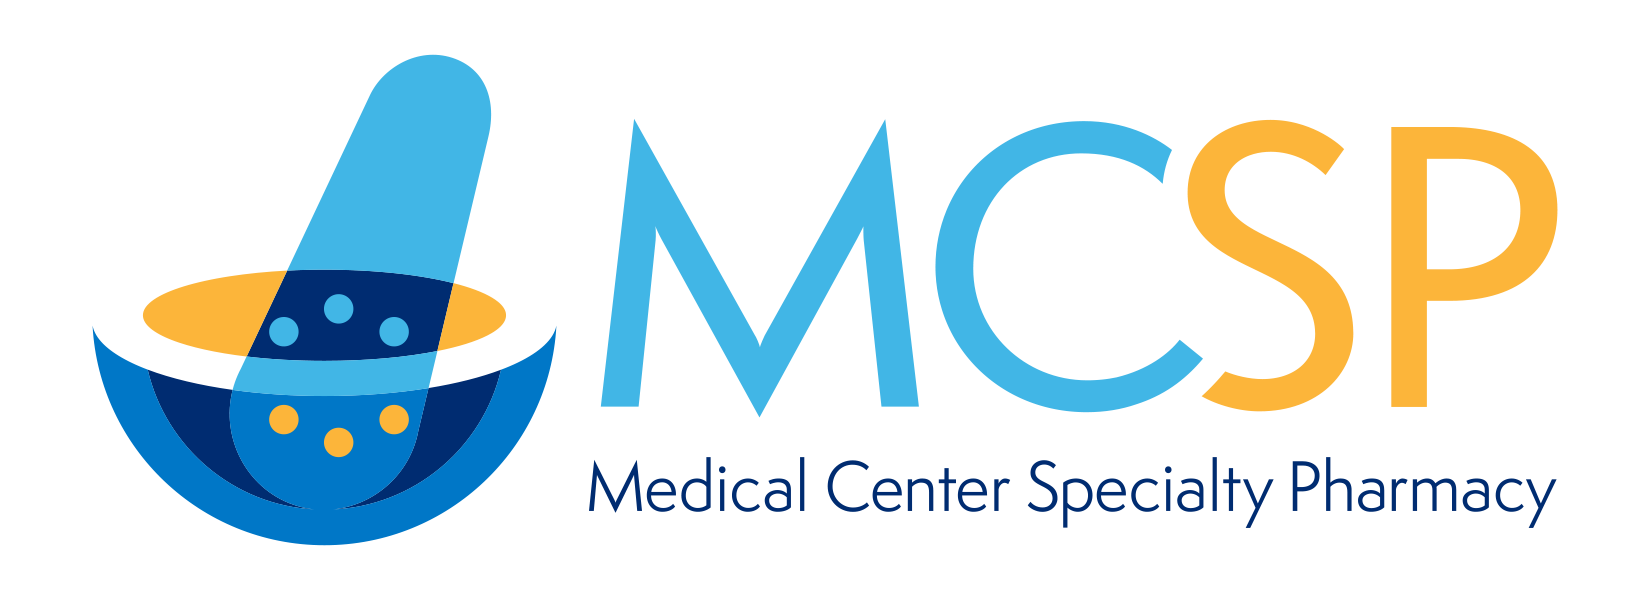 Medical Center Specialty Pharmacy